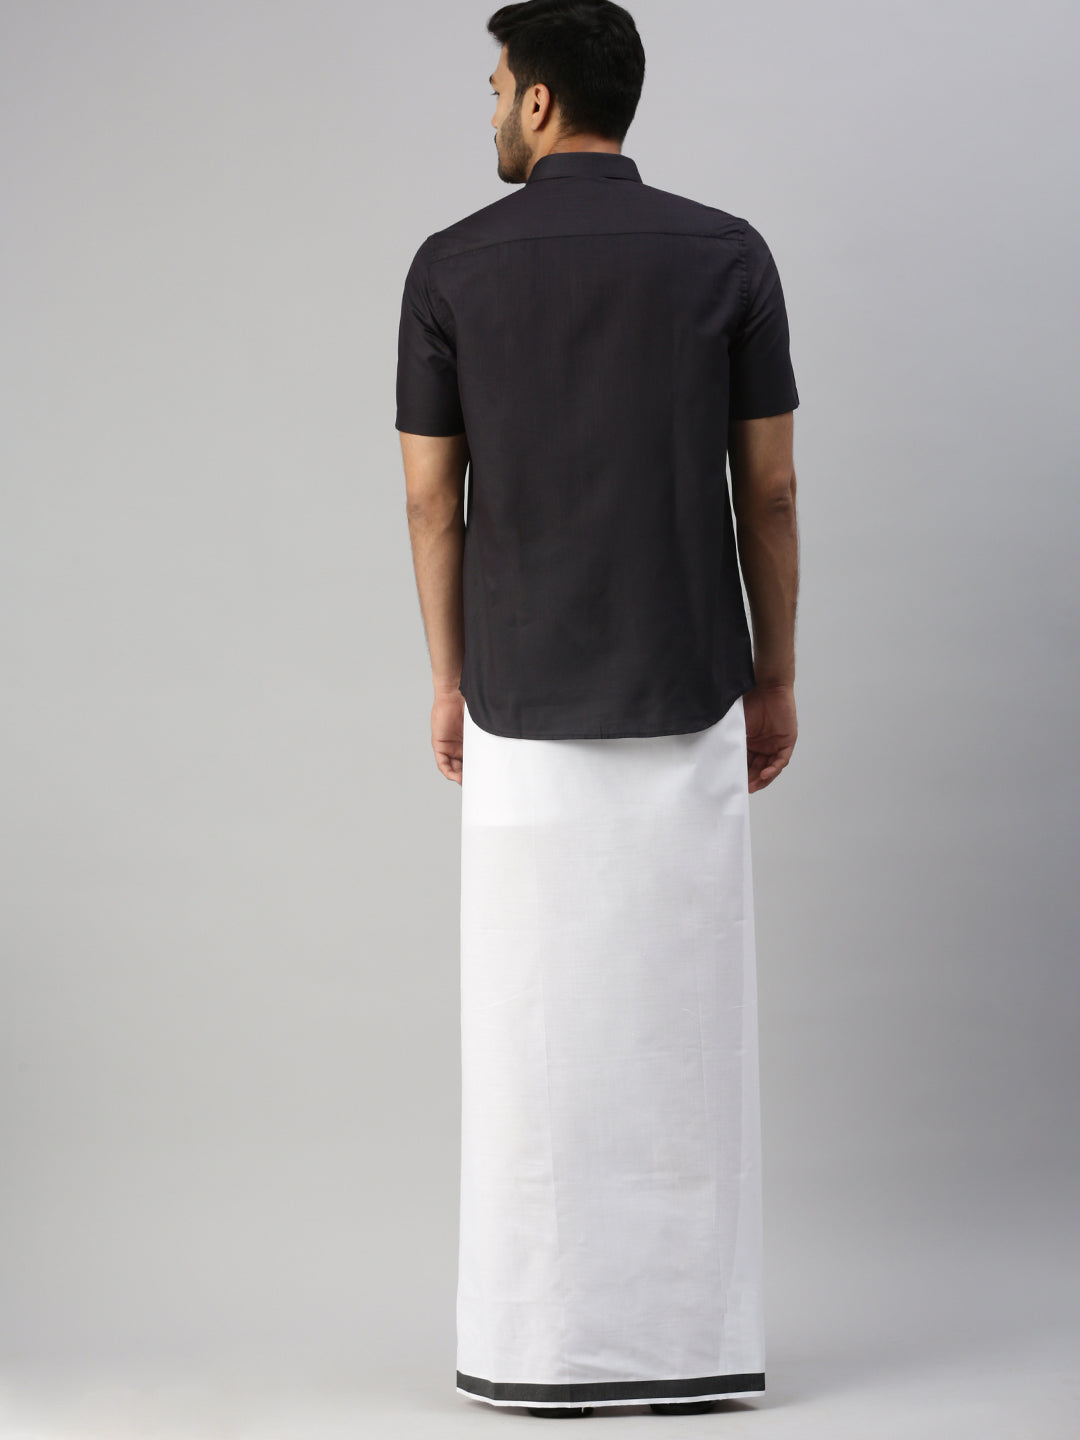 Mens Black Matching Border Dhoti & Half Sleeves Shirt Set Evolution IC10-Back view